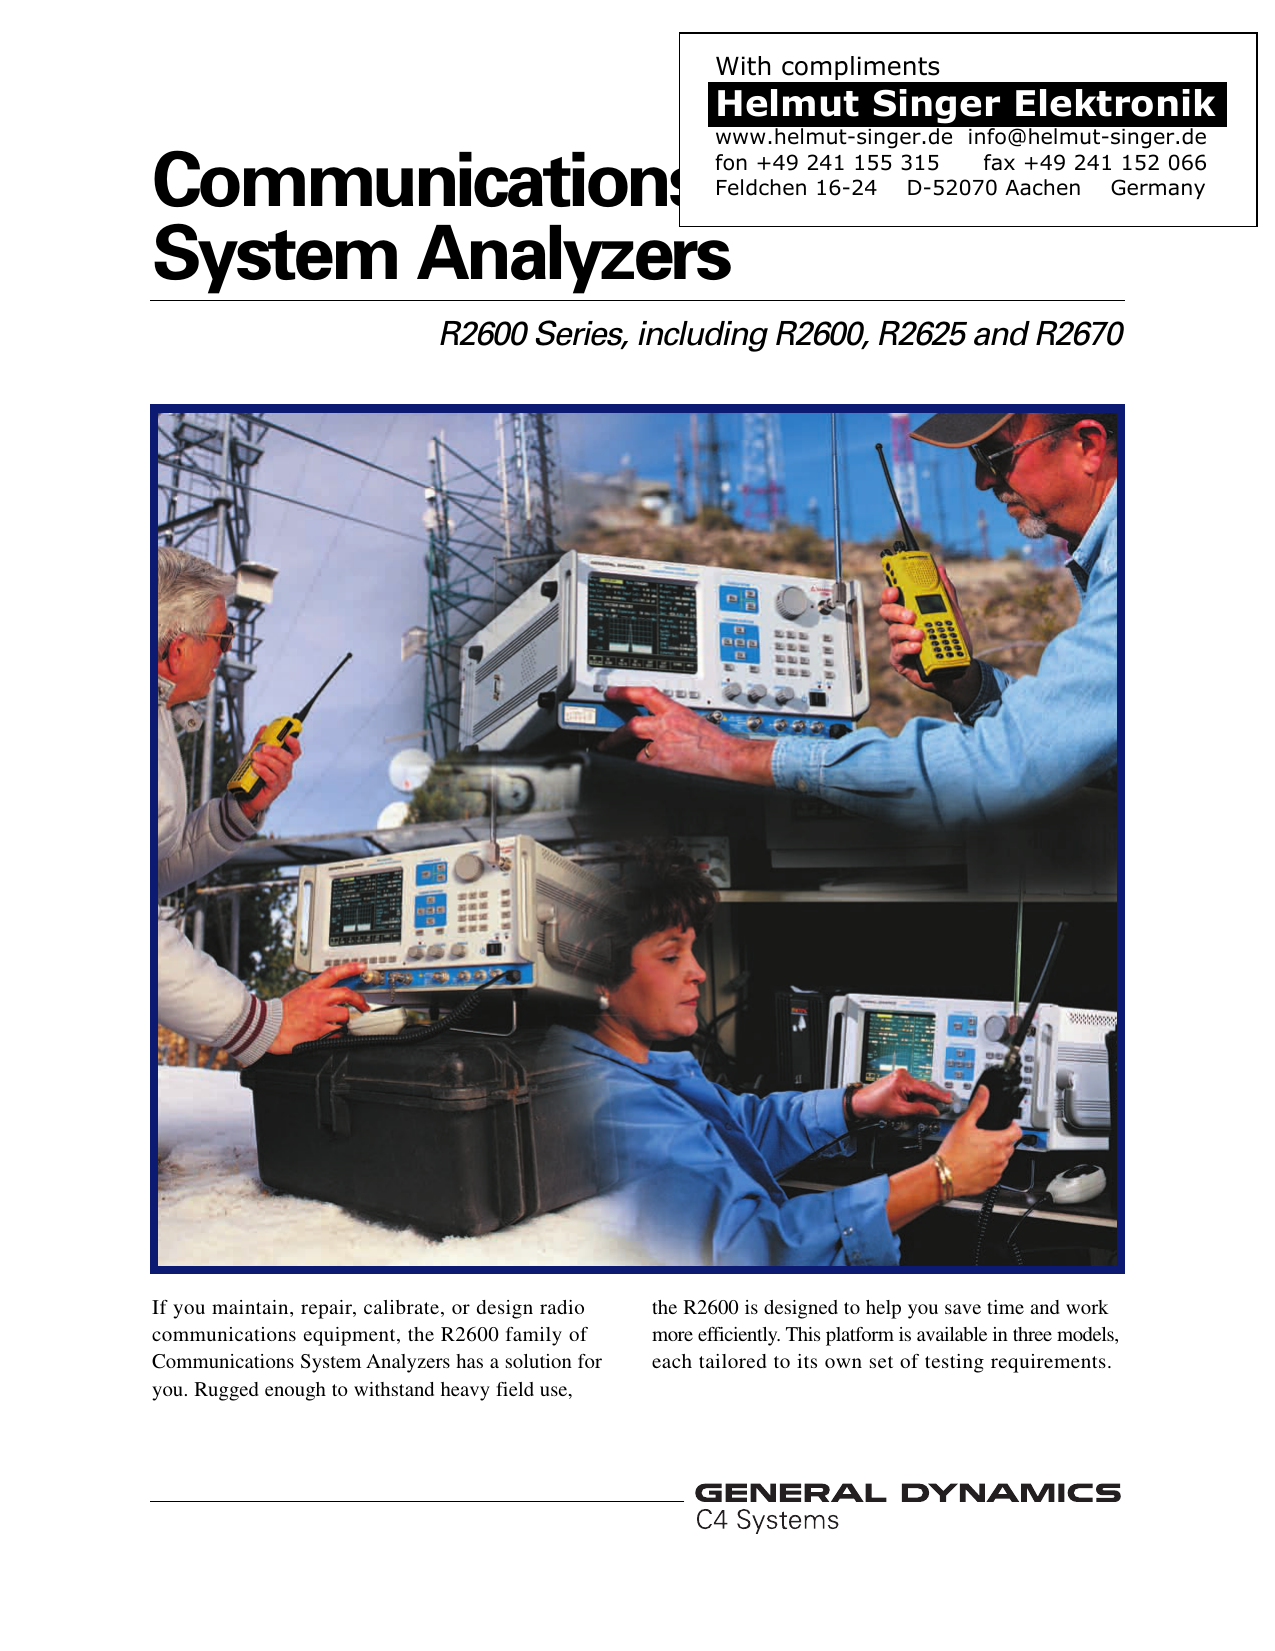 general dynamics r2670 service monitor